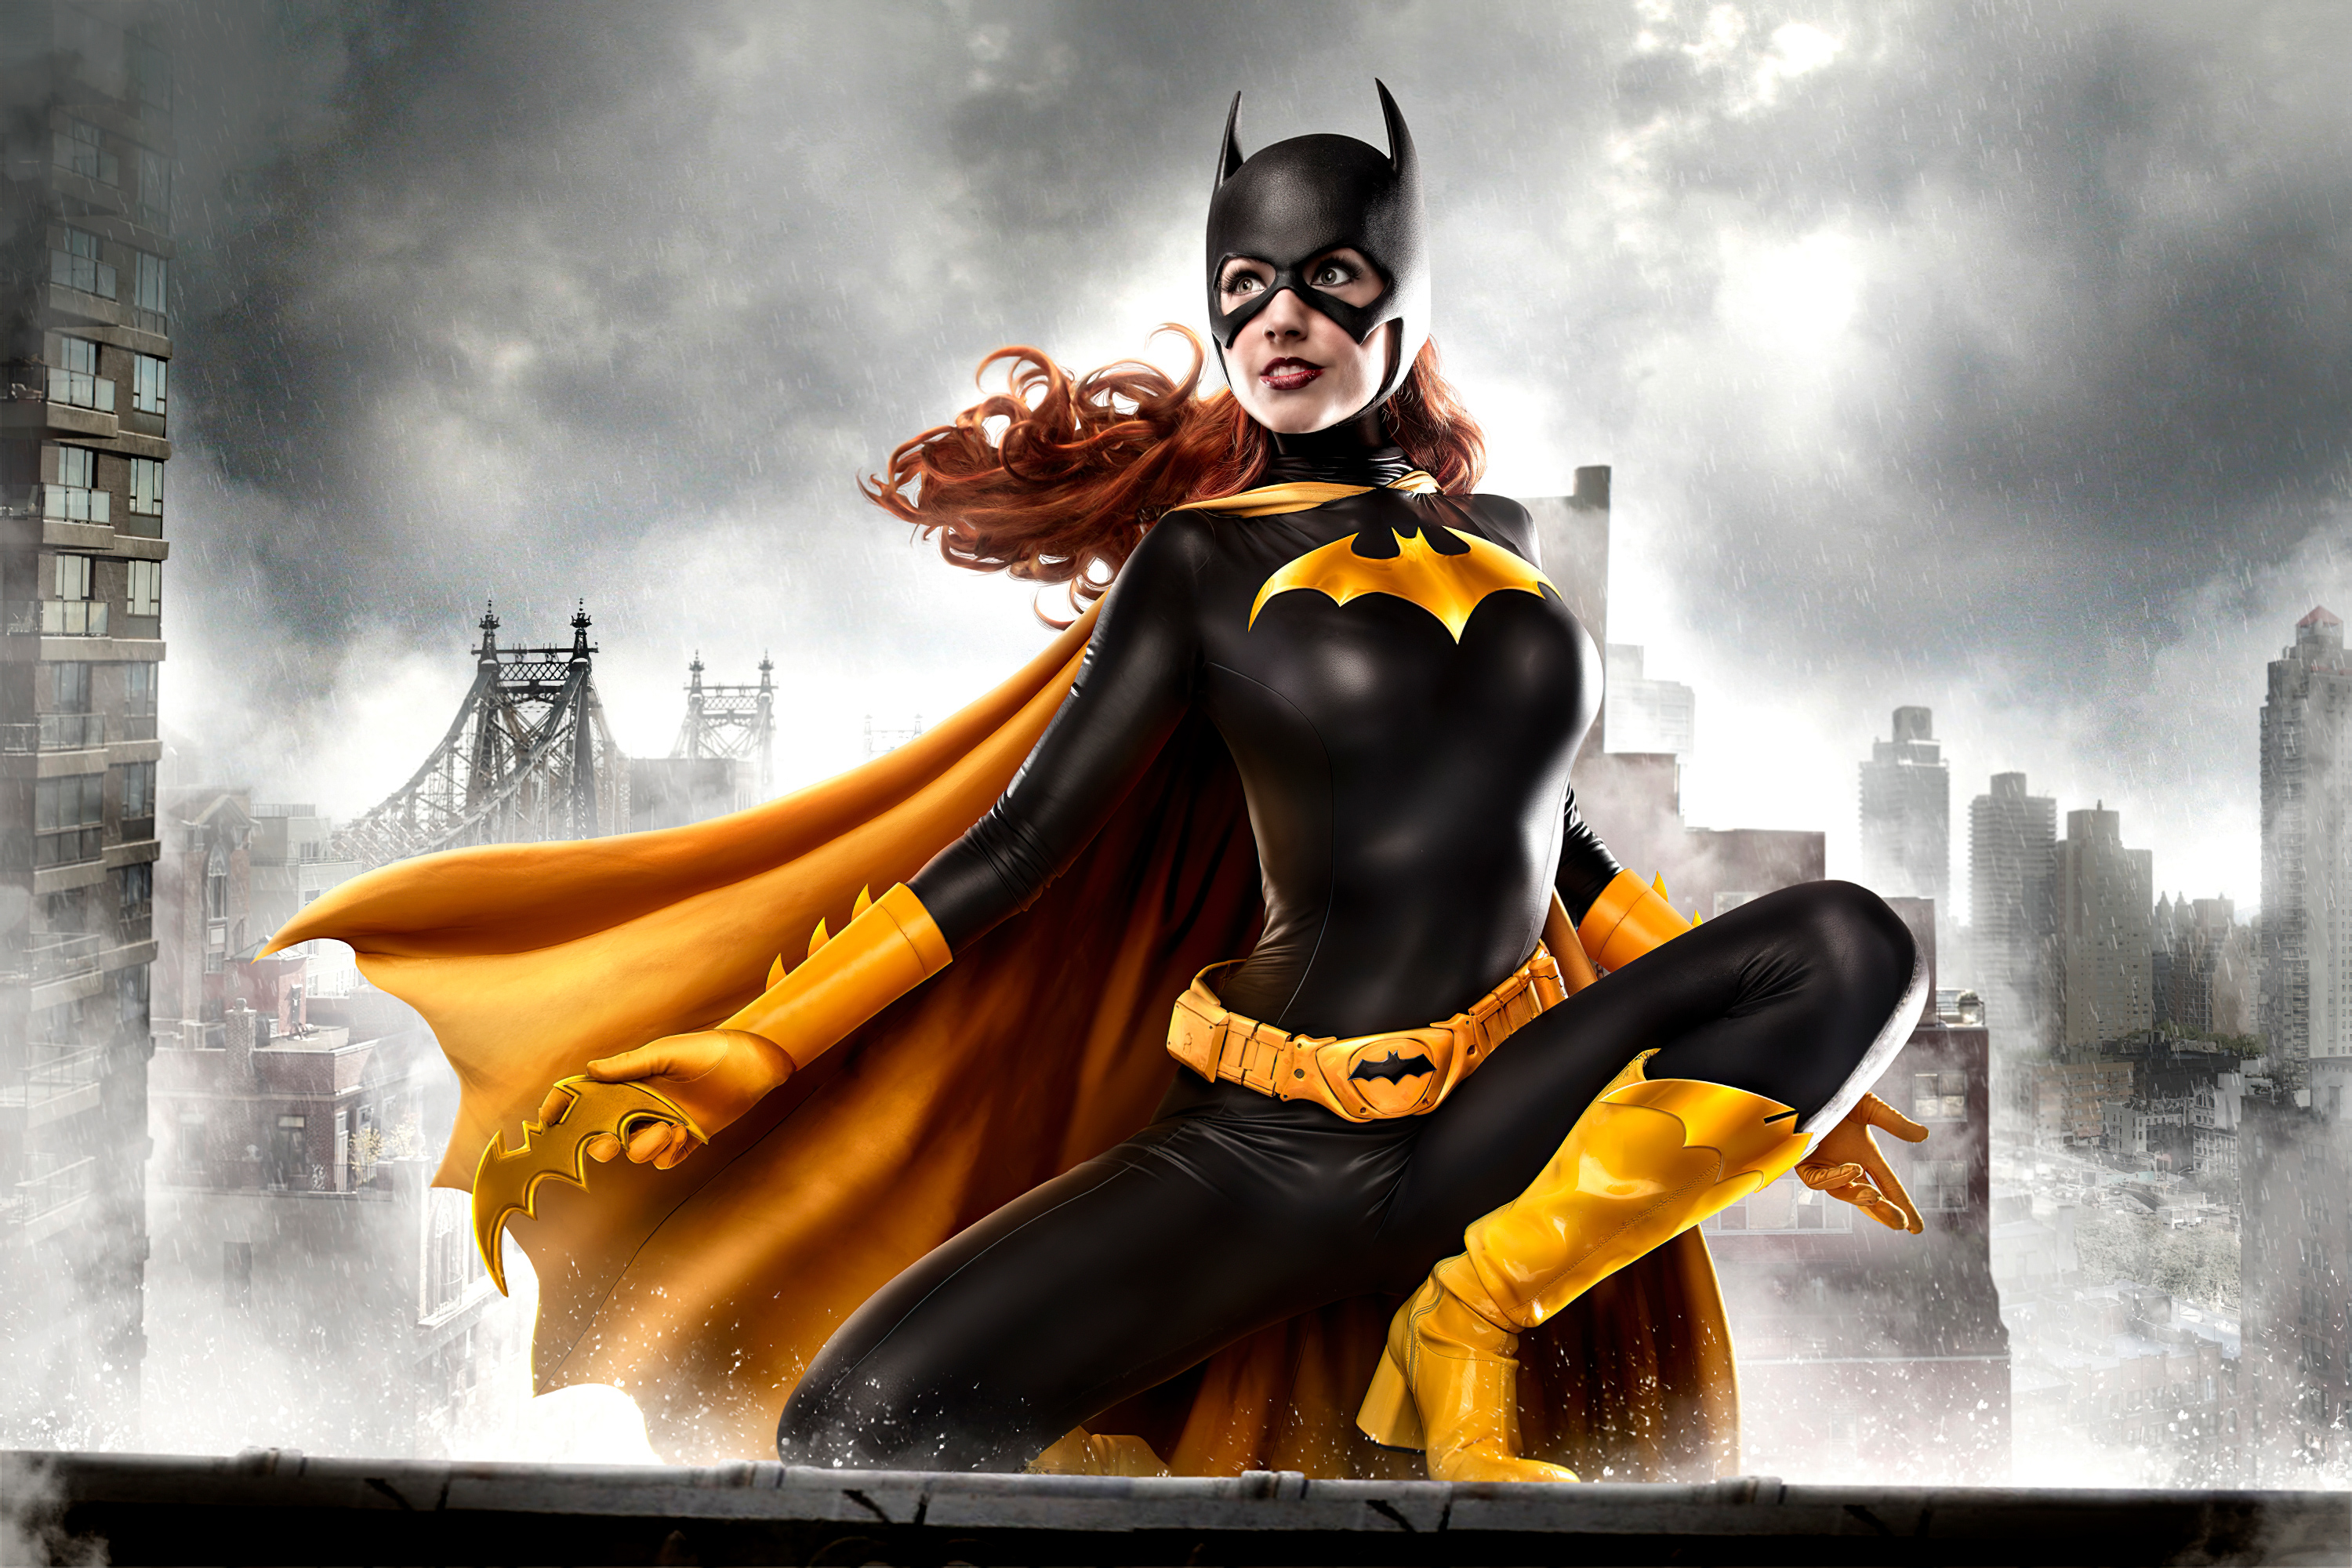 batgirl-cosplay-wallpaper-hd-superheroes-4k-wallpapers-images-and